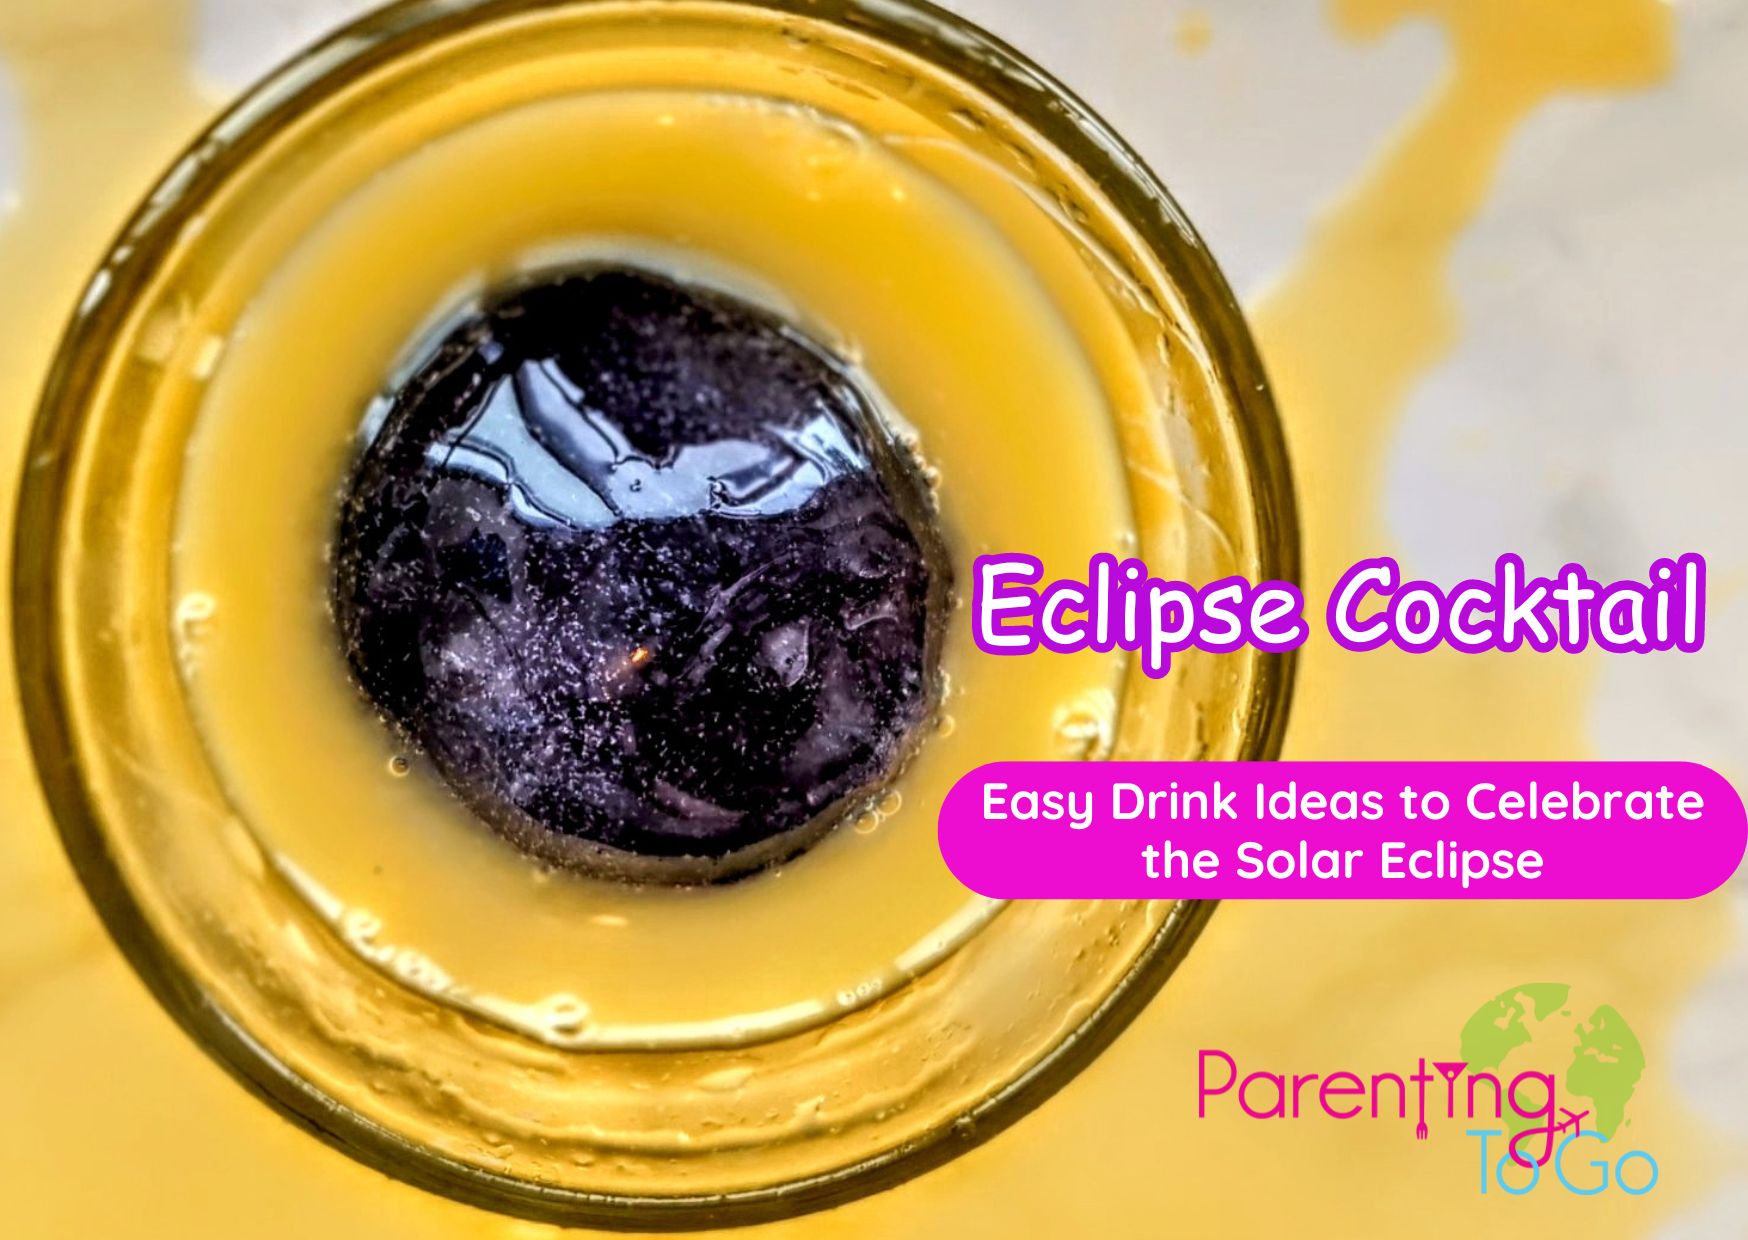 Eclipse Cocktail with orange juice and dark ice